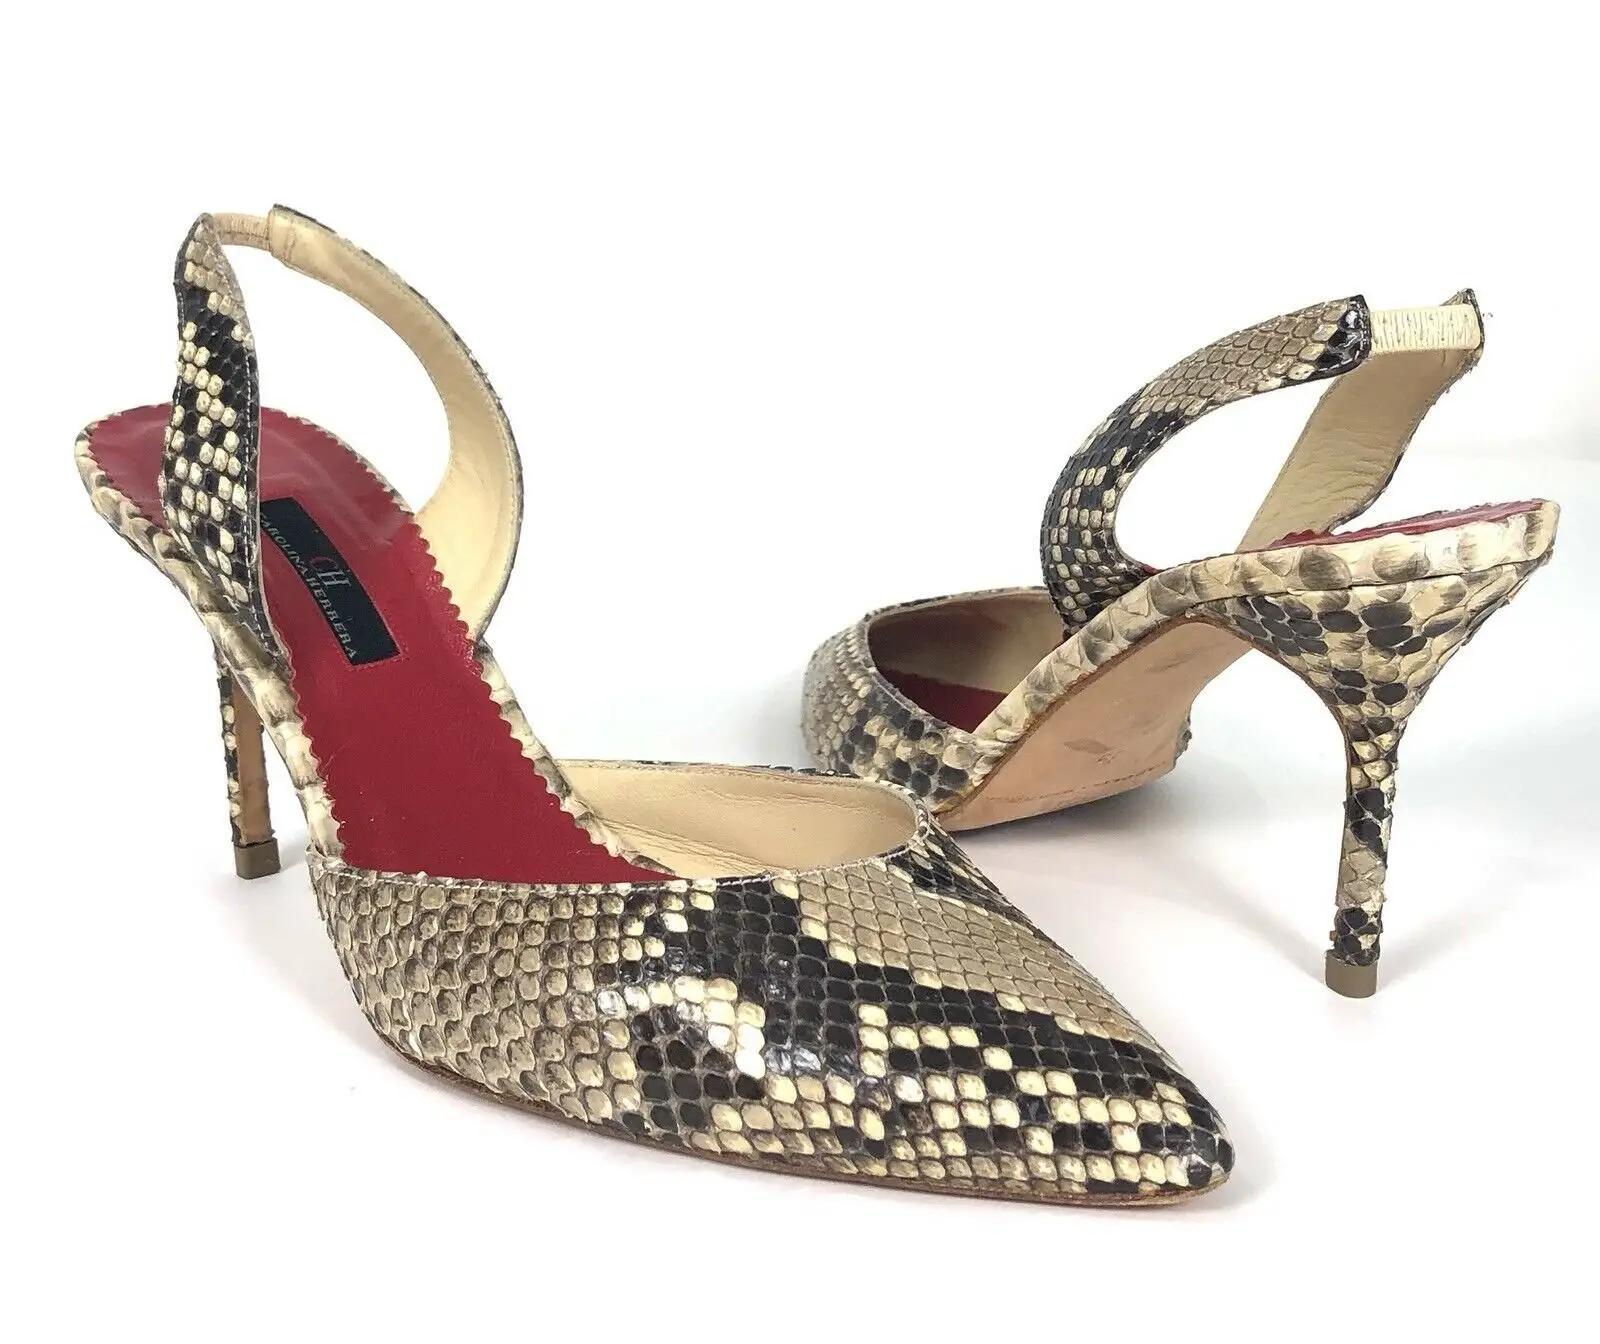 Queen Letizia of Spain wore Carolina Herrera python leather Initials Insignia Slingback pumps